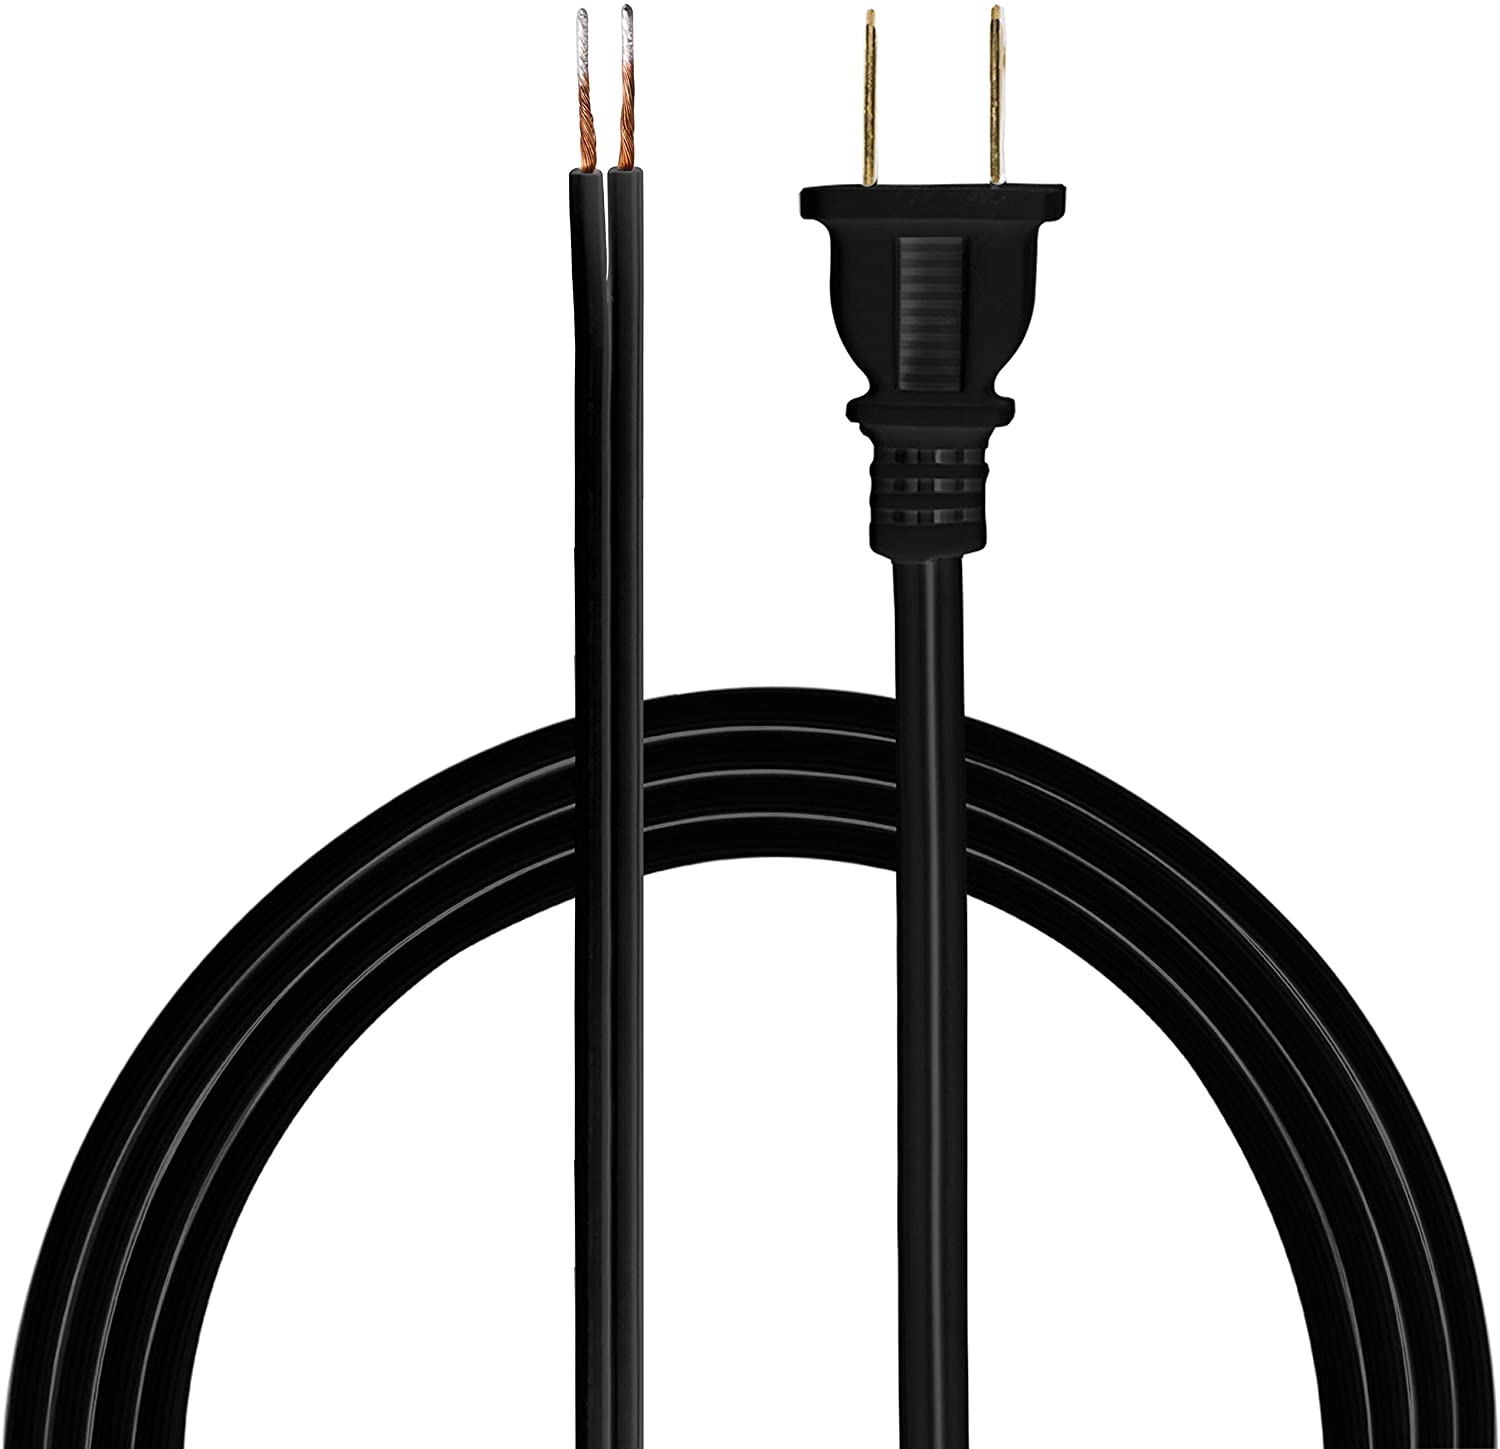 SPT-2 Lamp Cord